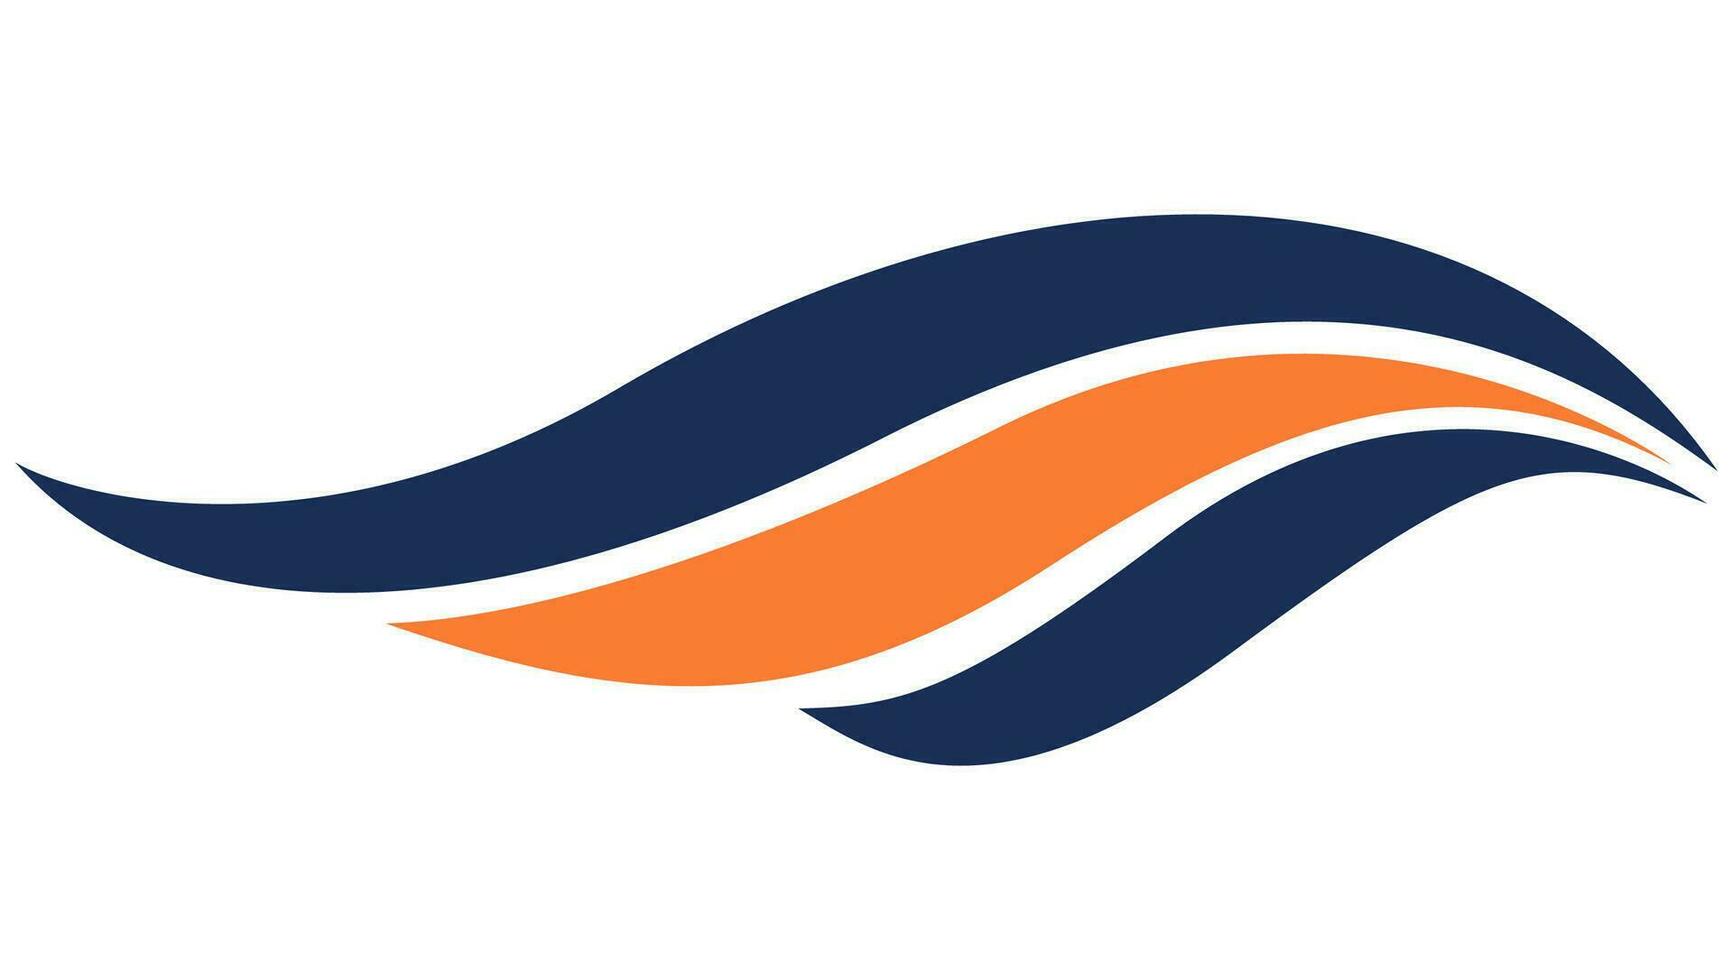 Abstract Swoosh Logo Design Template vector